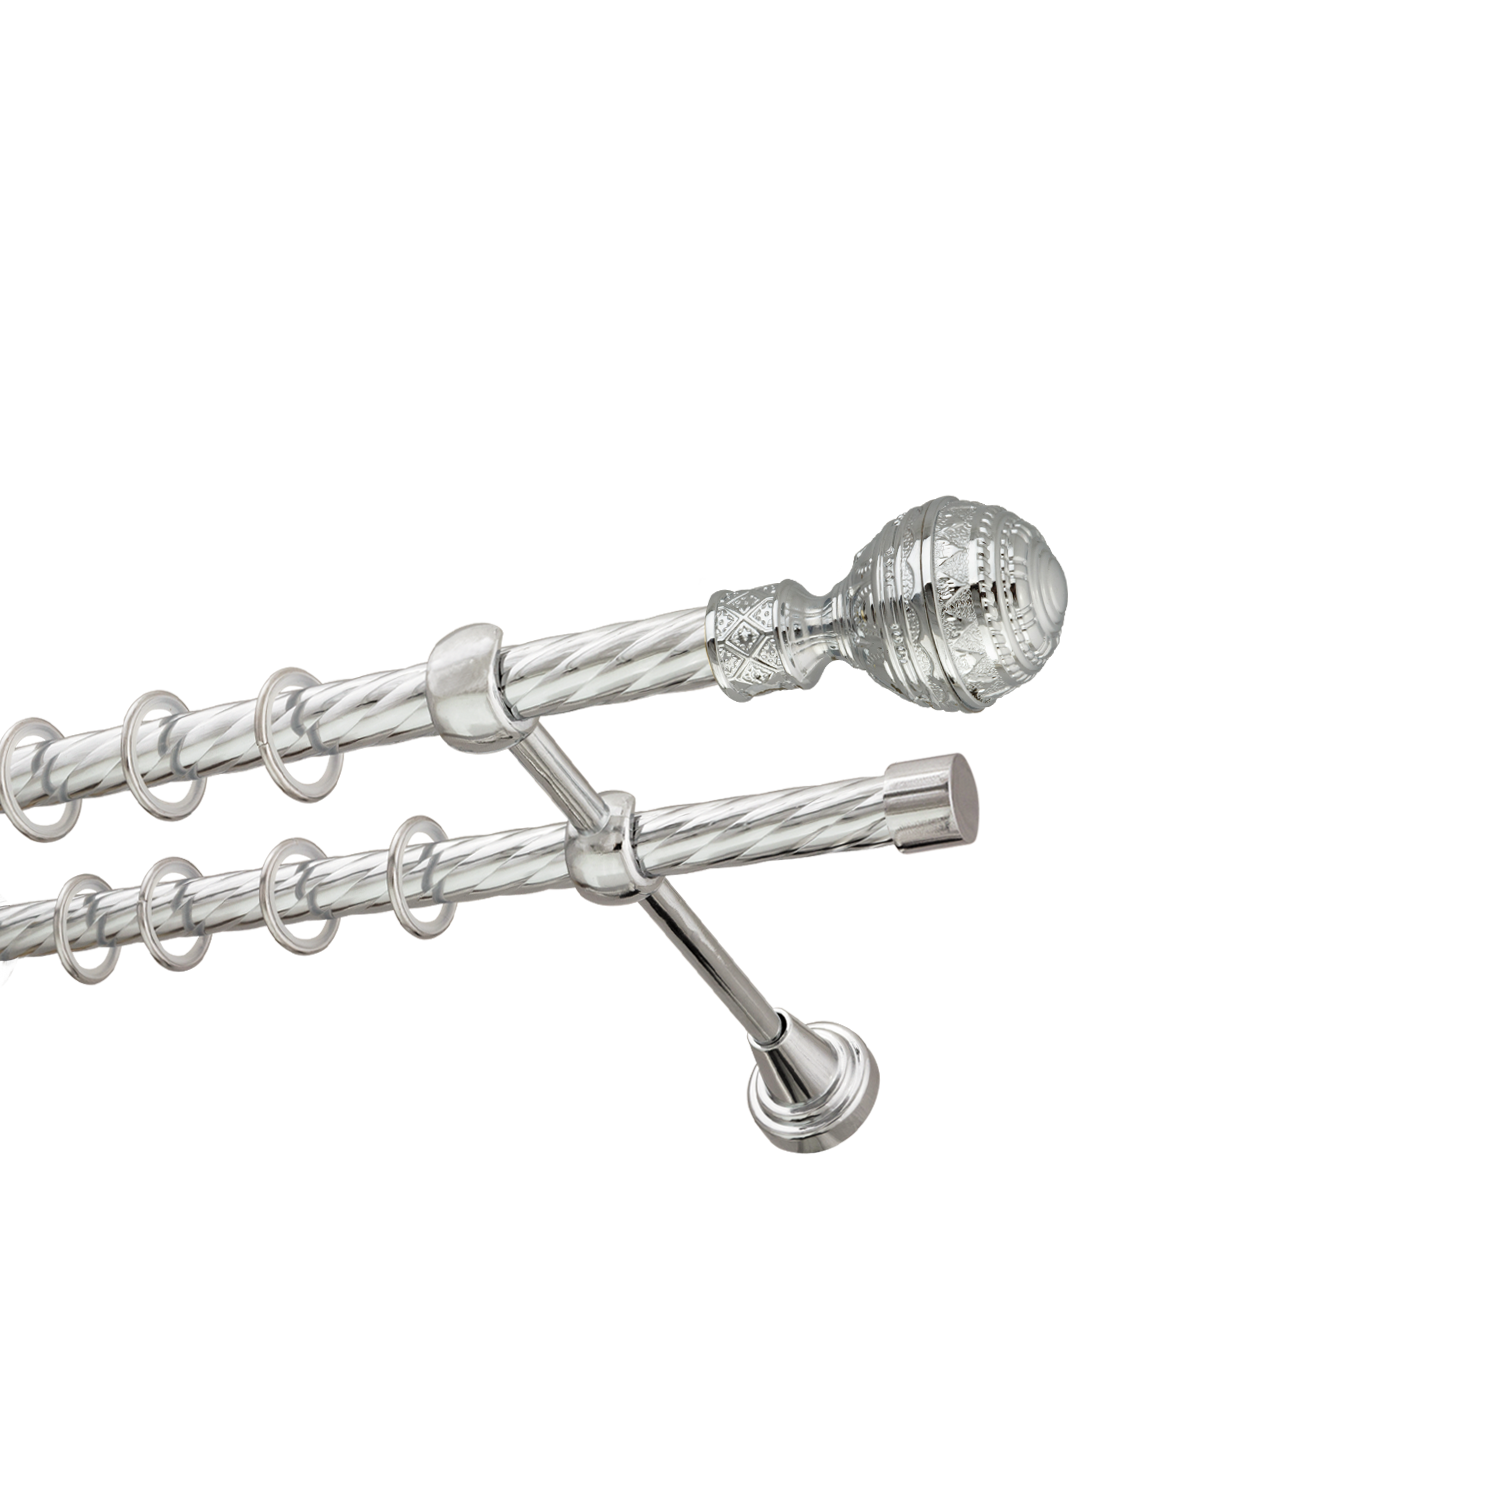 Металлический карниз для штор Роял, двухрядный 16/16 мм, серебро, витая штанга, длина 200 см - фото Wikidecor.ru